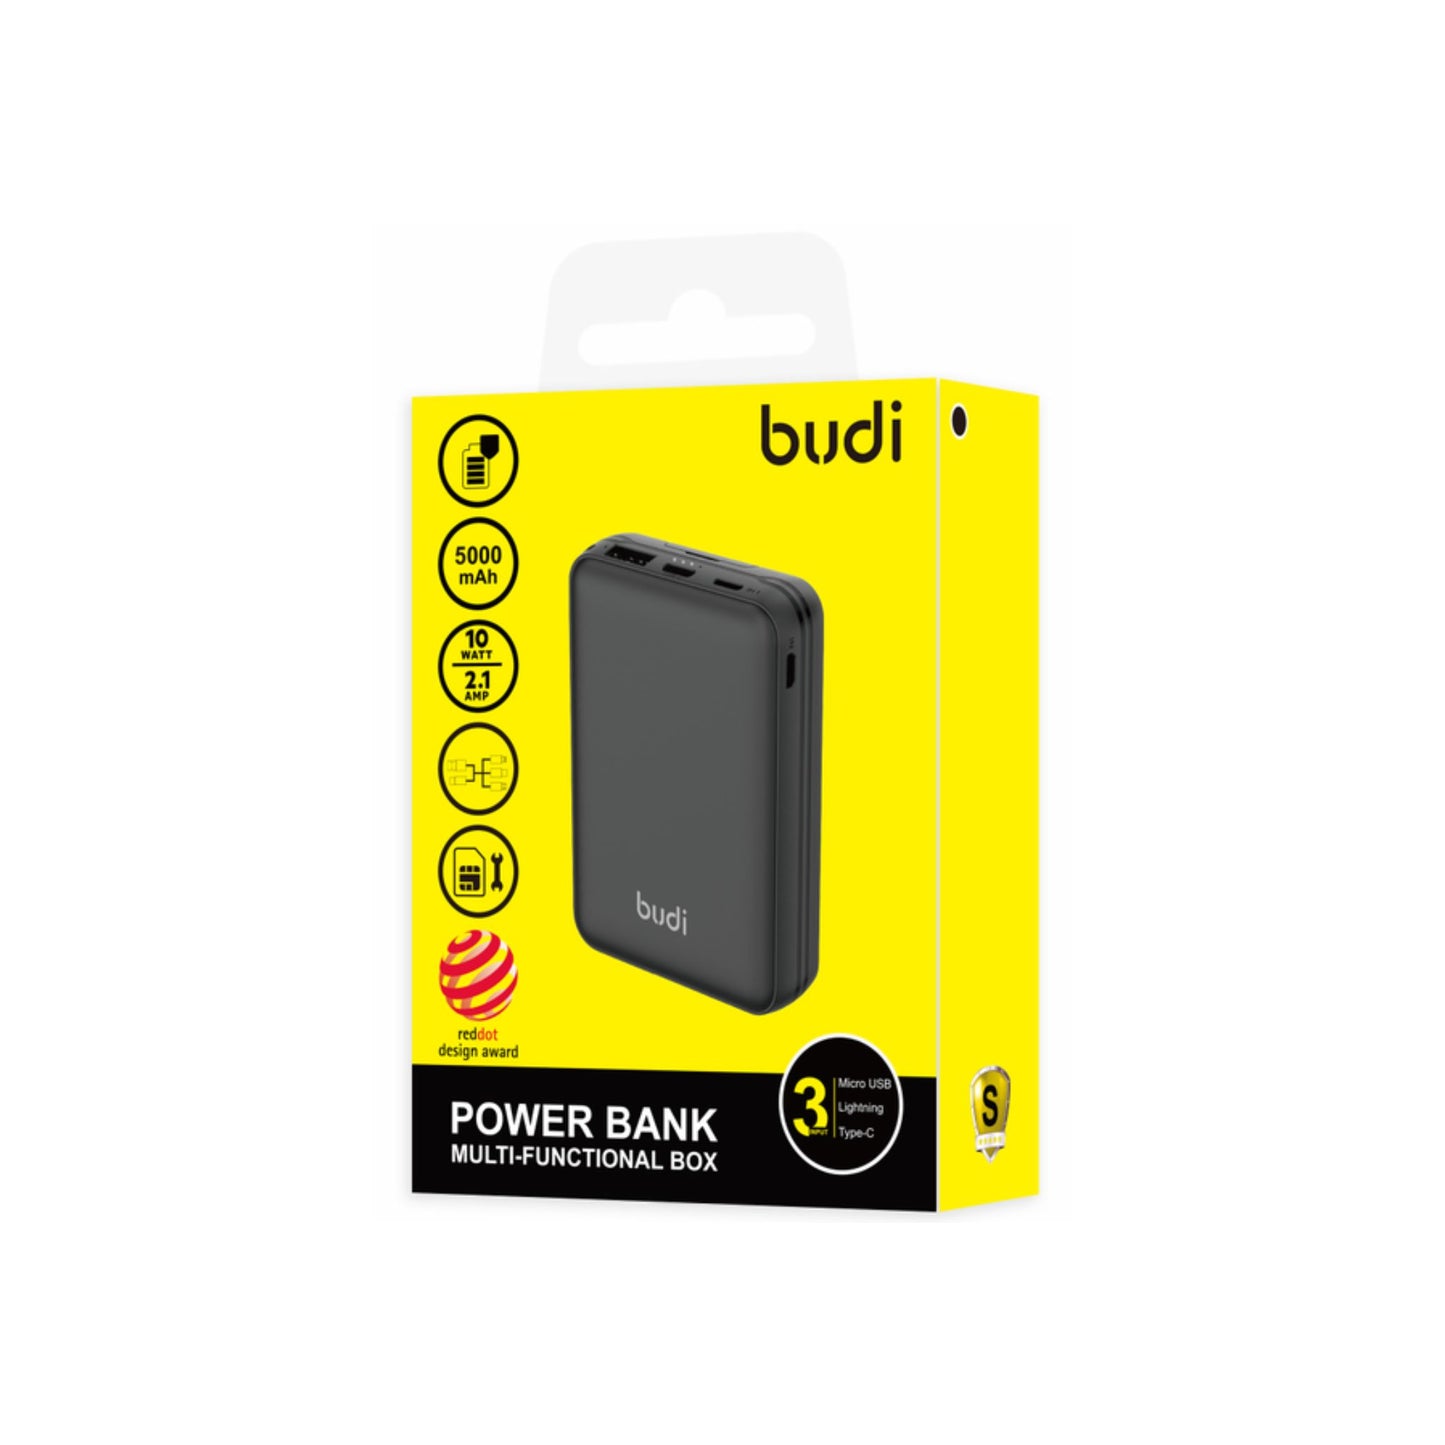 Budi Multifunctional power bank box